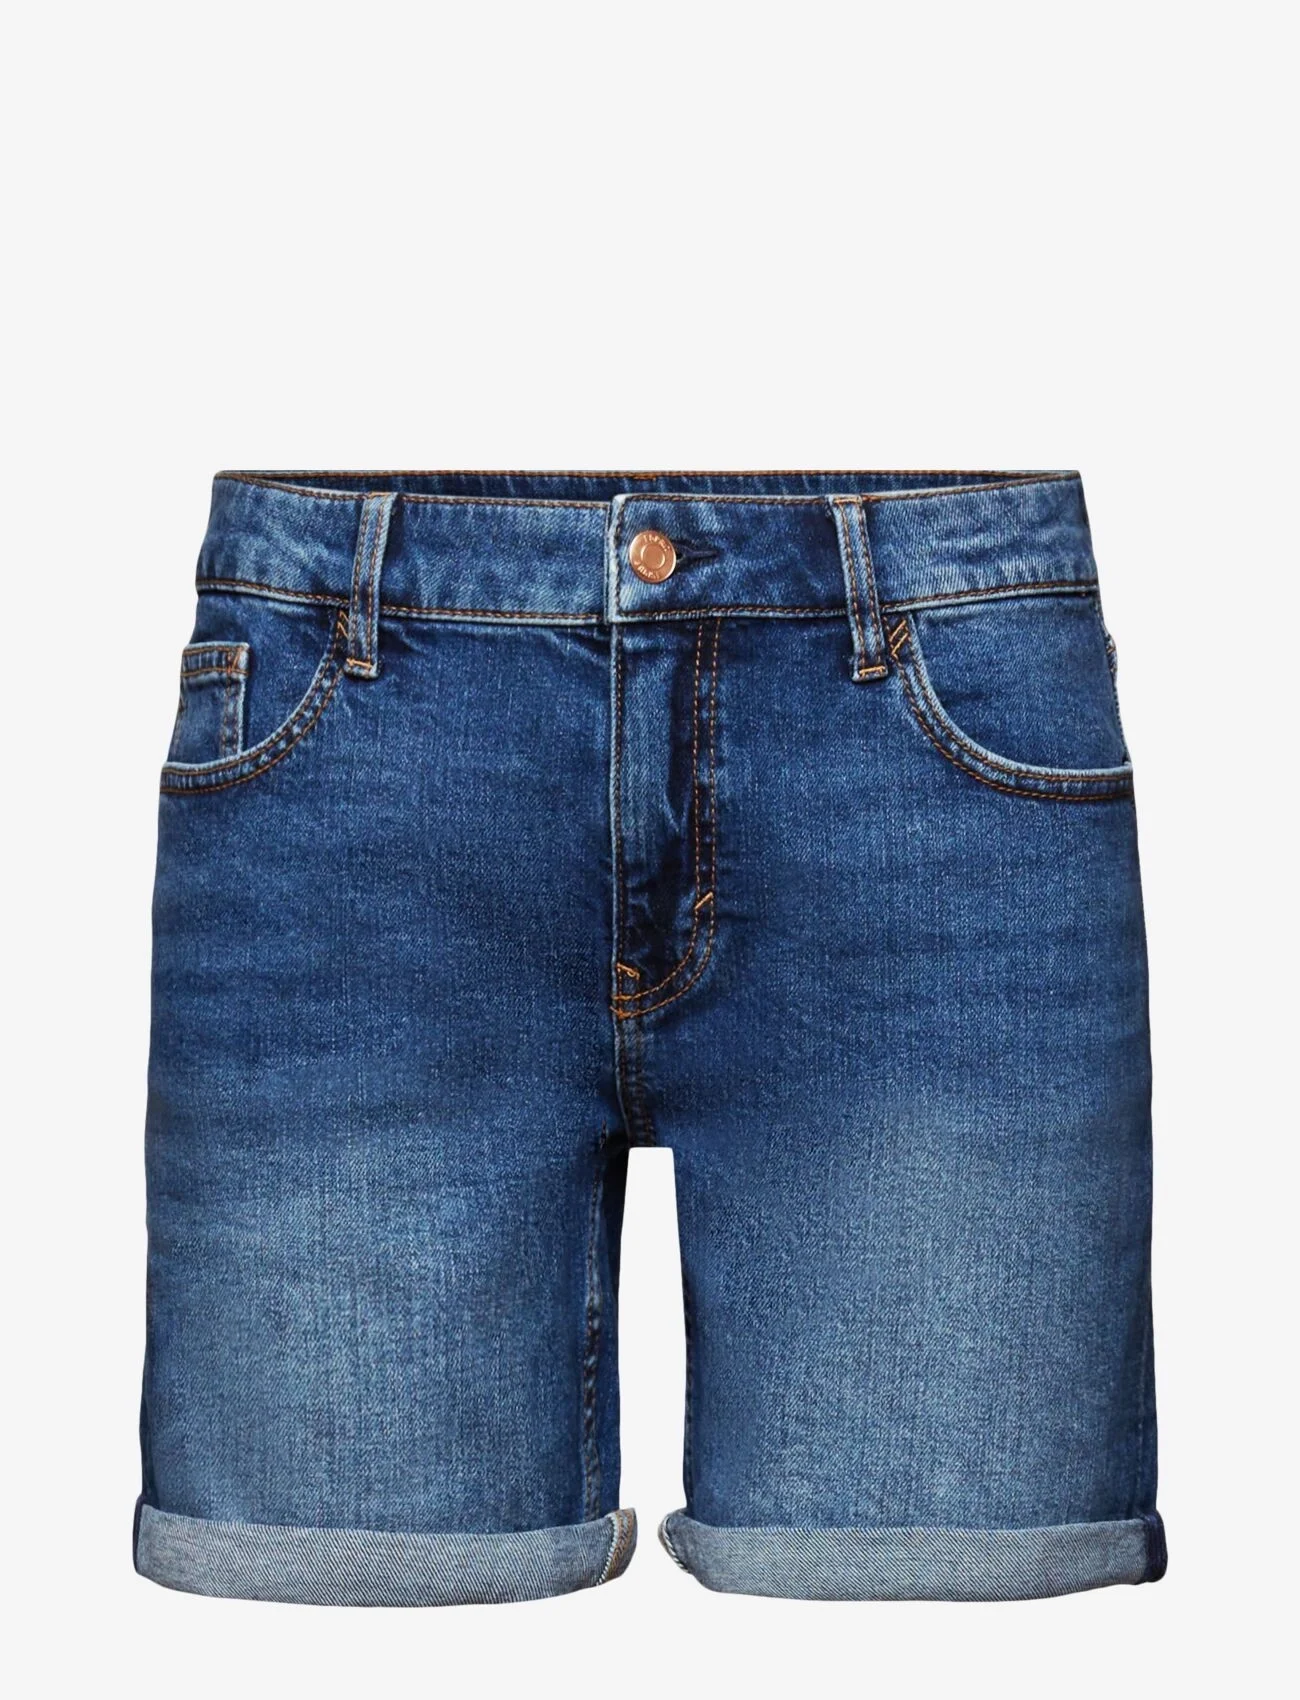 Esprit Casual - Shorts denim - denimshorts - blue medium wash - 0